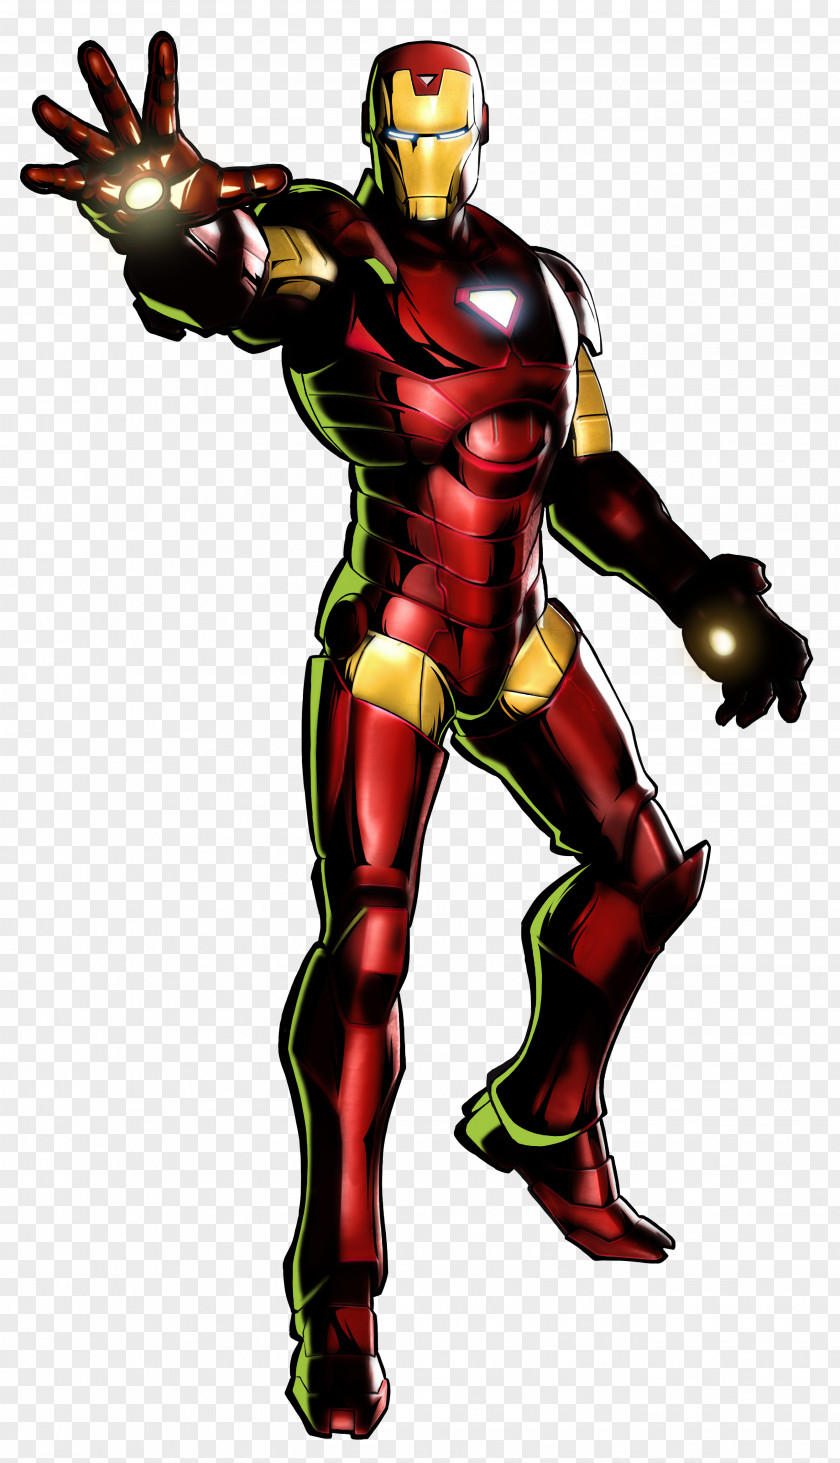 Iron Man Ultimate Marvel Vs. Capcom 3 3: Fate Of Two Worlds Capcom: Infinite Clash Super Heroes PNG